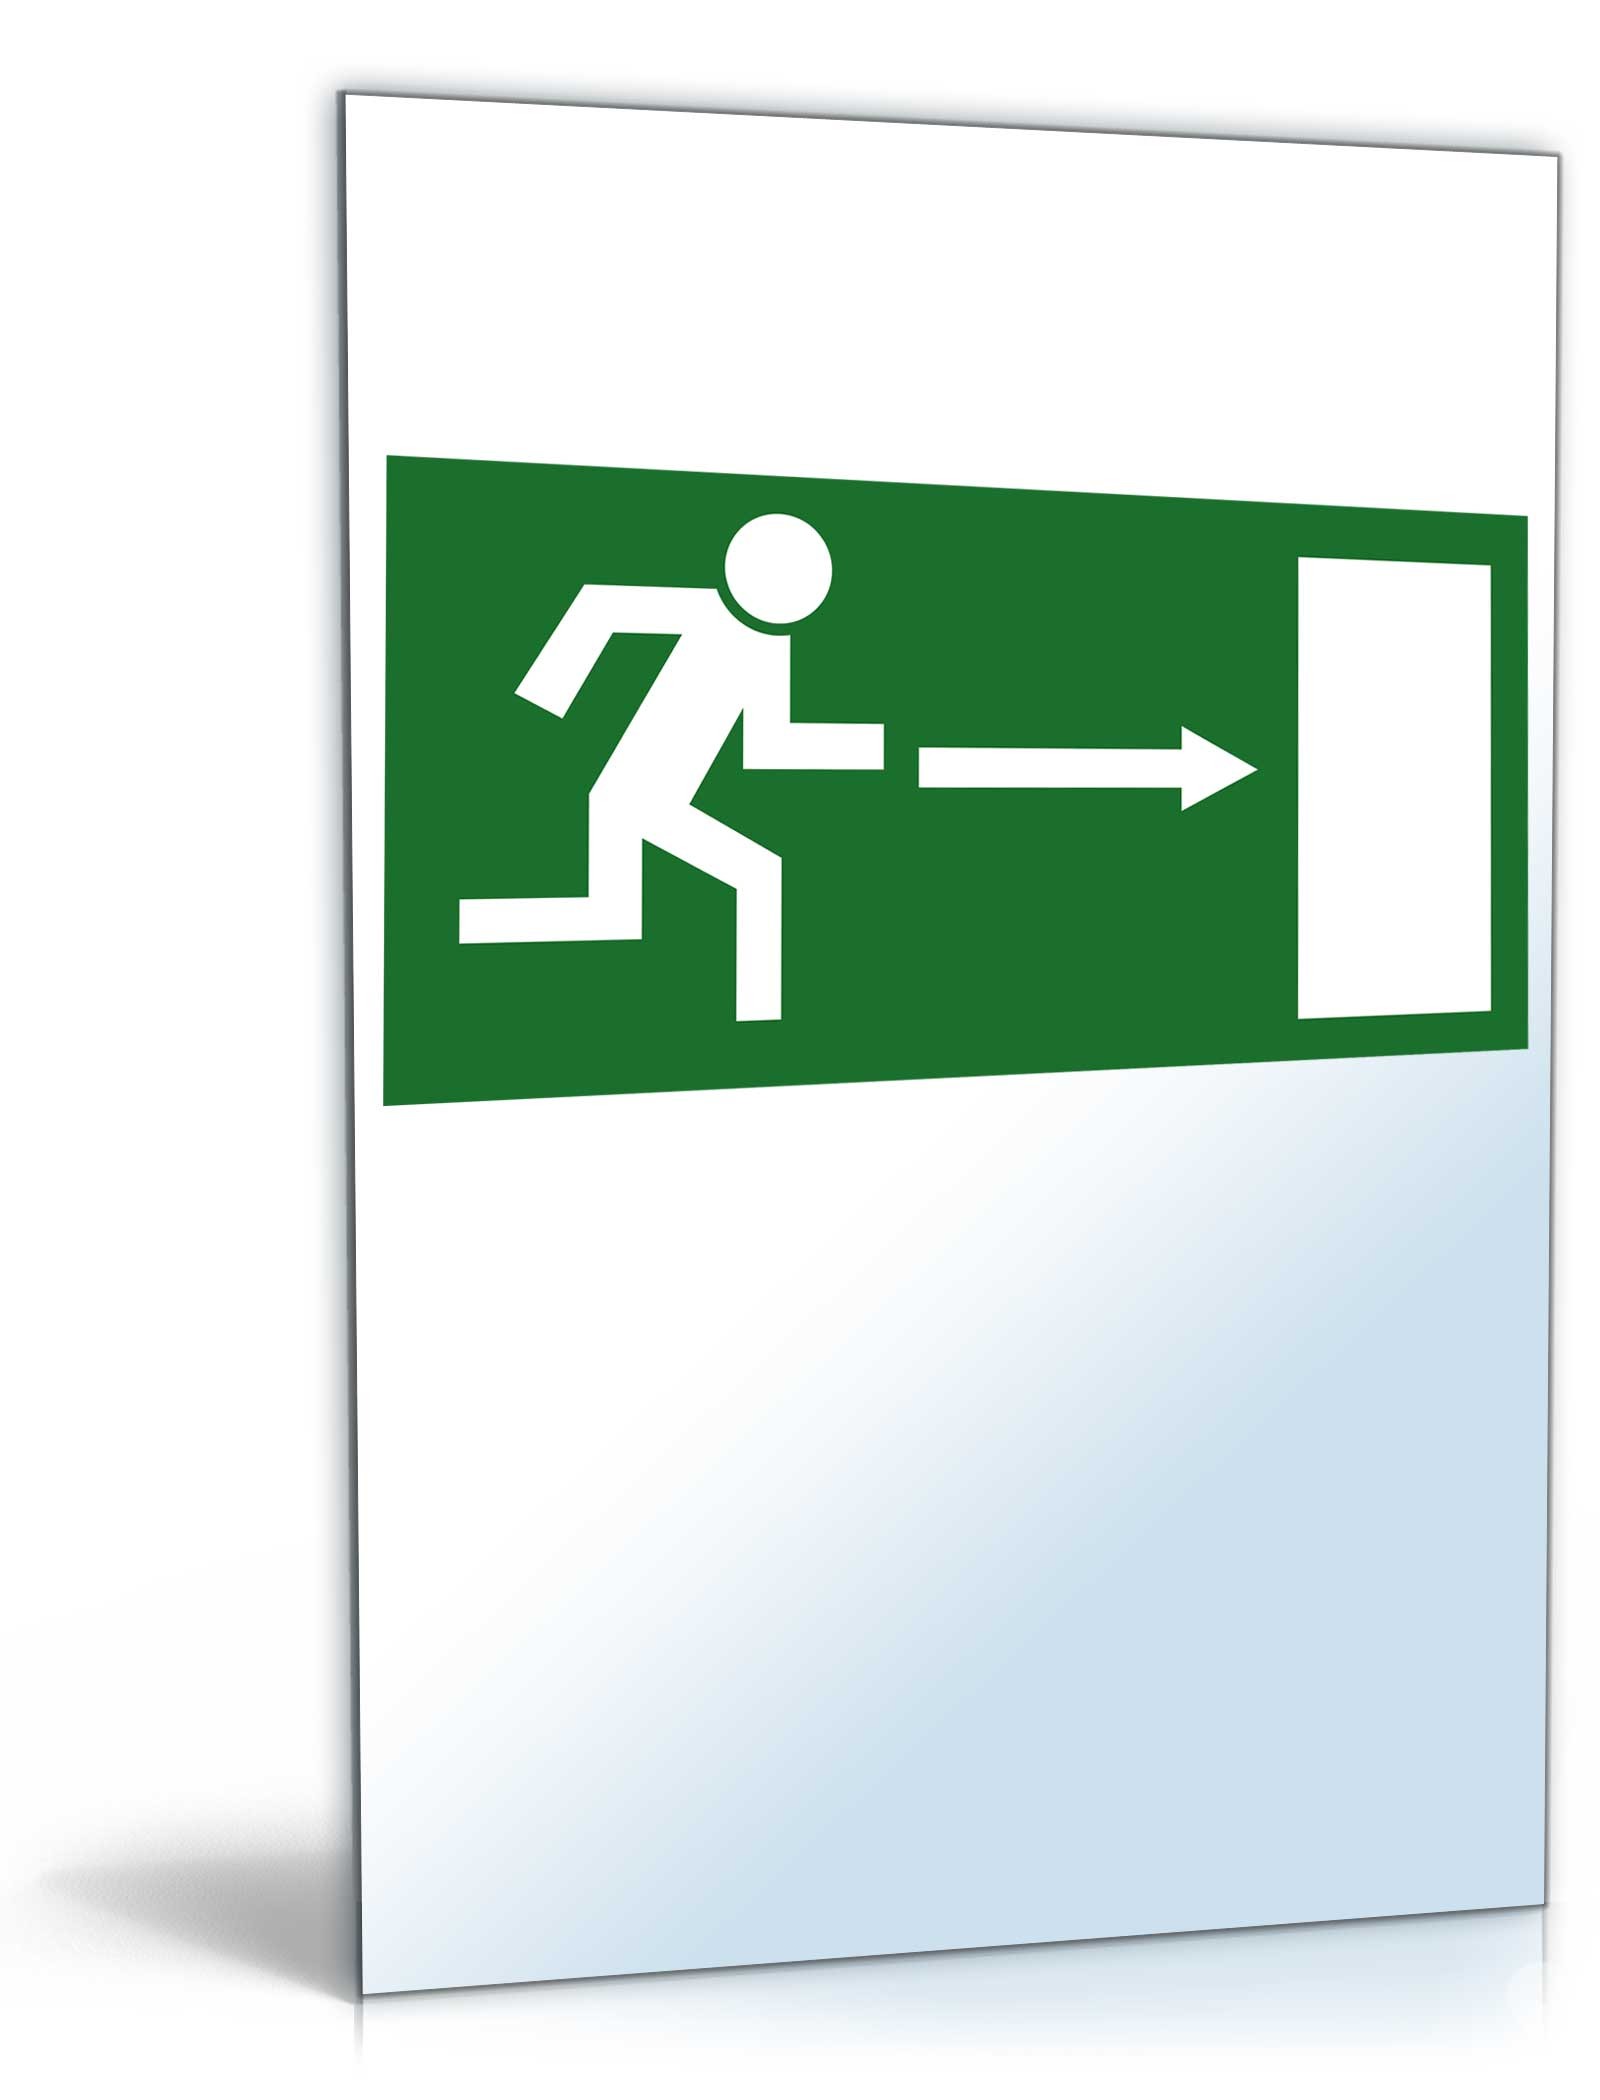 Hauptbild des Produkts: Schild "Notausgang nach rechts"